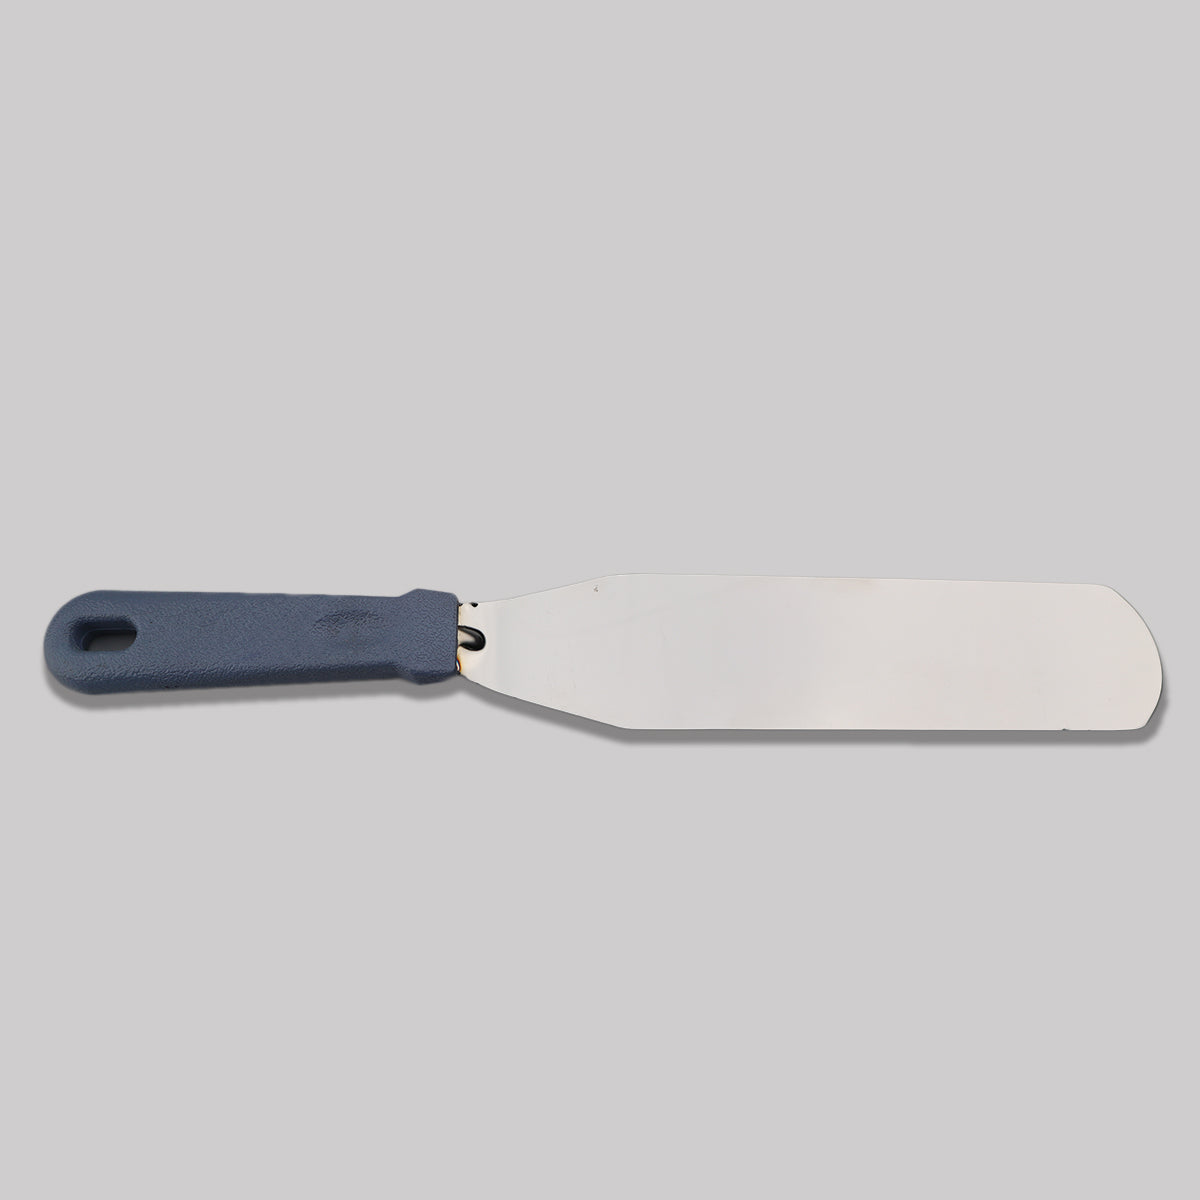 Best Stainless Steel Food Turner Plastic Handle Flexible Grill Turner/Spatula - Long Blade